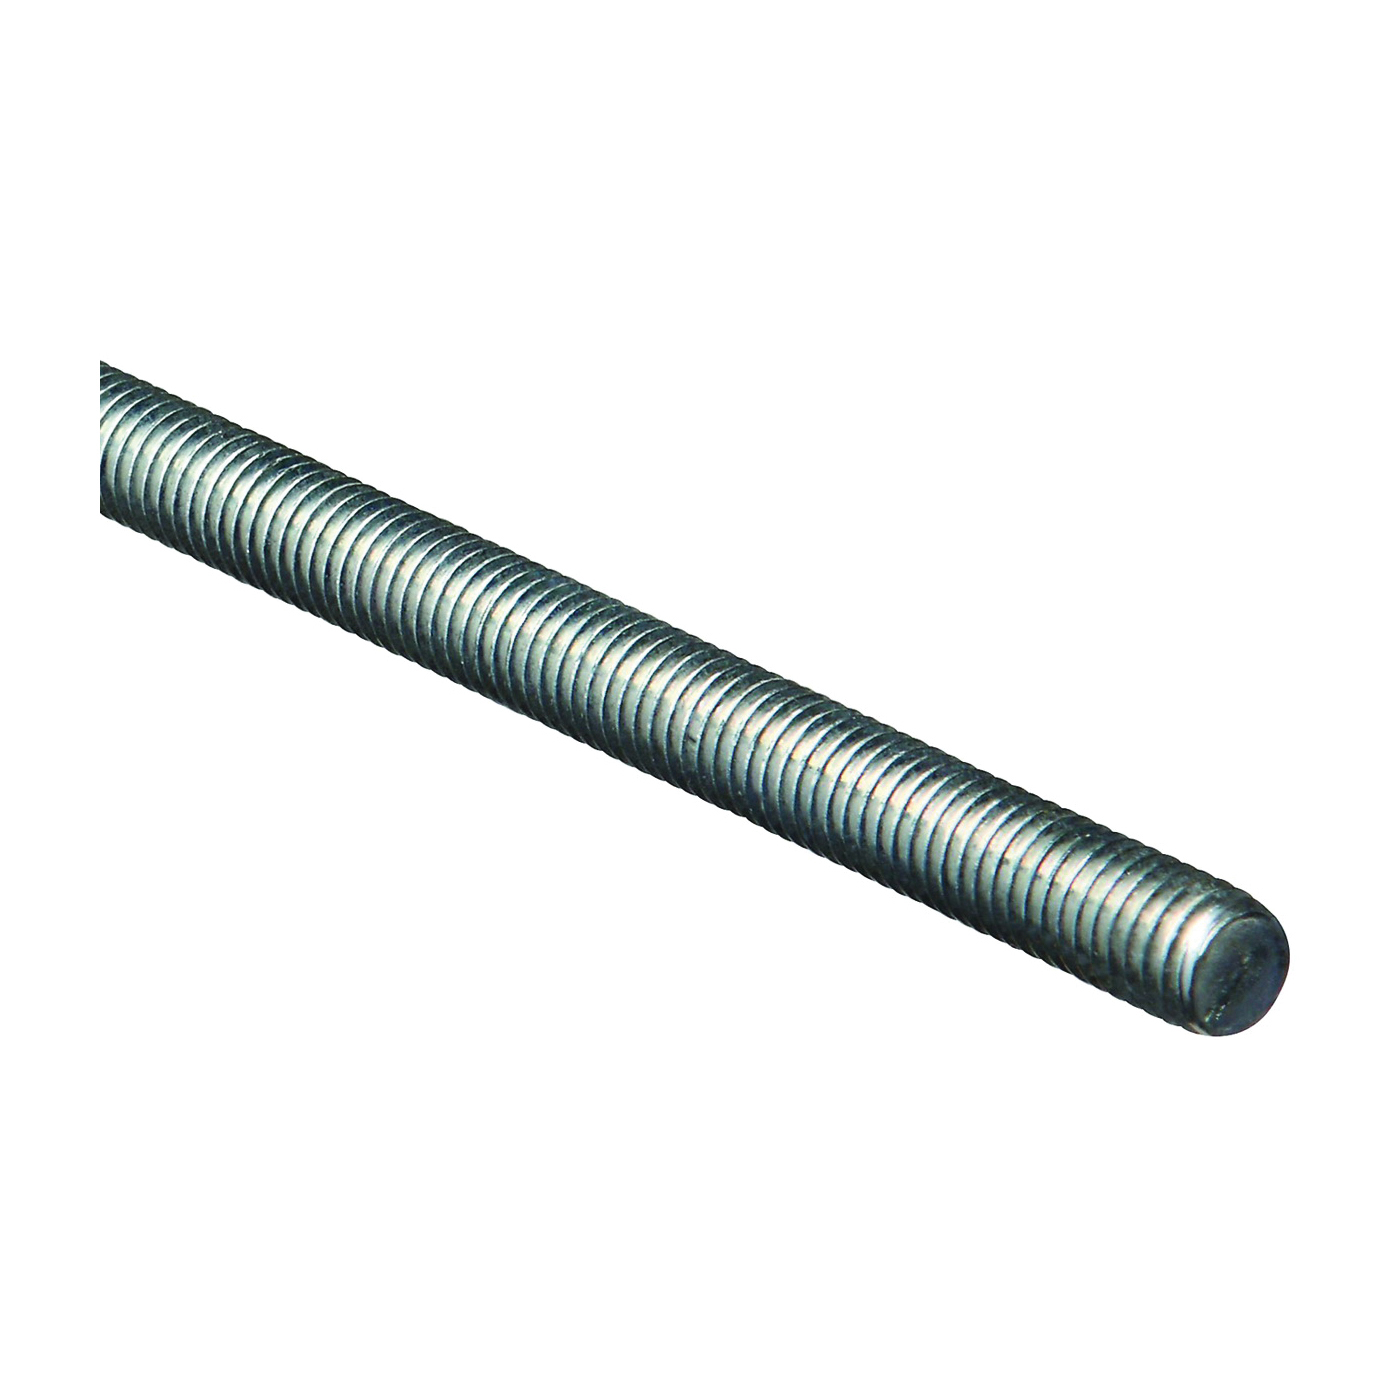 N179-440 Threaded Rod, 7/16-14 Thread, 24 in L, A Grade, Steel, Zinc, UNC Thread